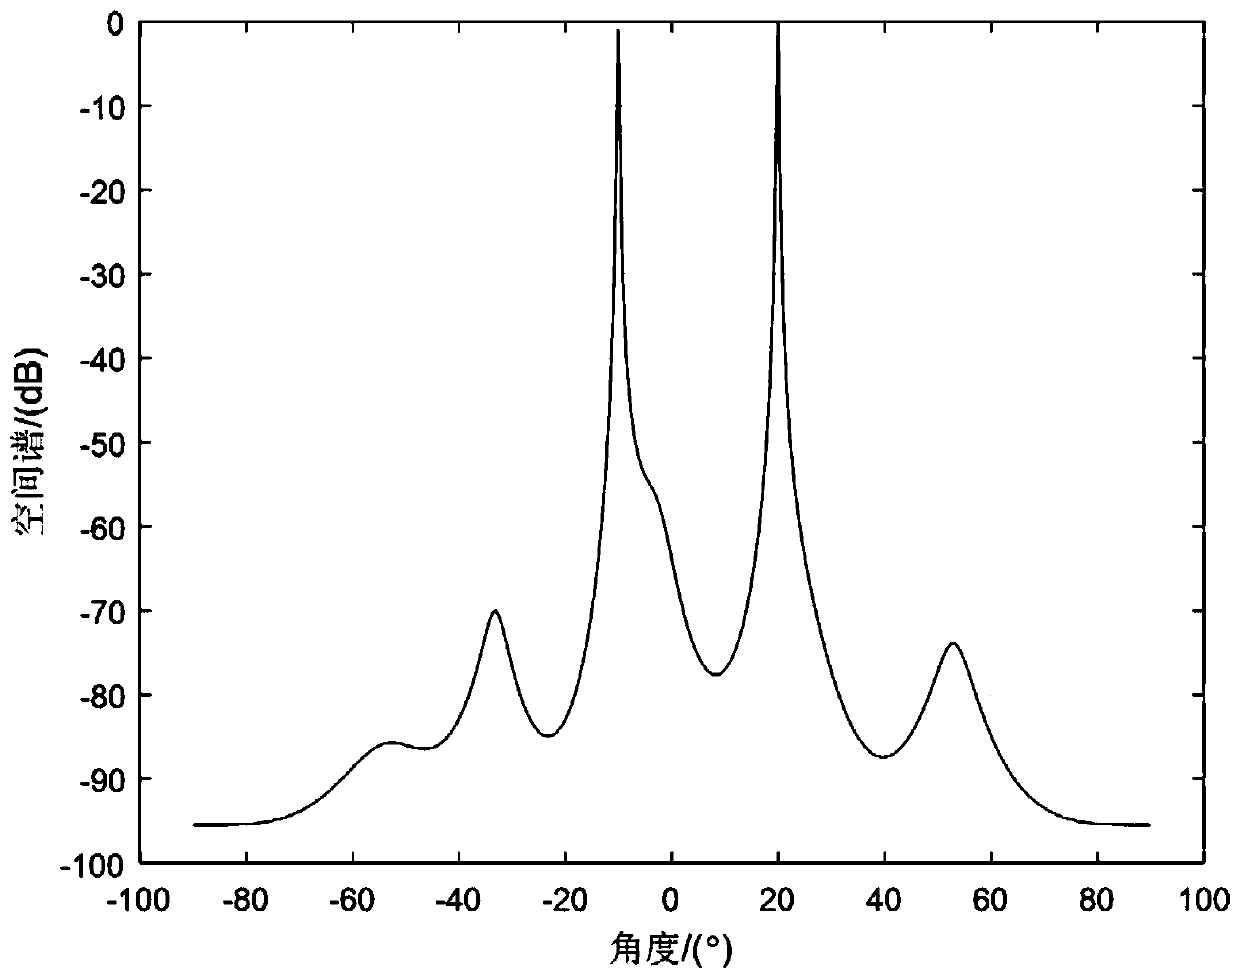 Wideband signal DOA estimation method based on sparse representation of covariance matrix